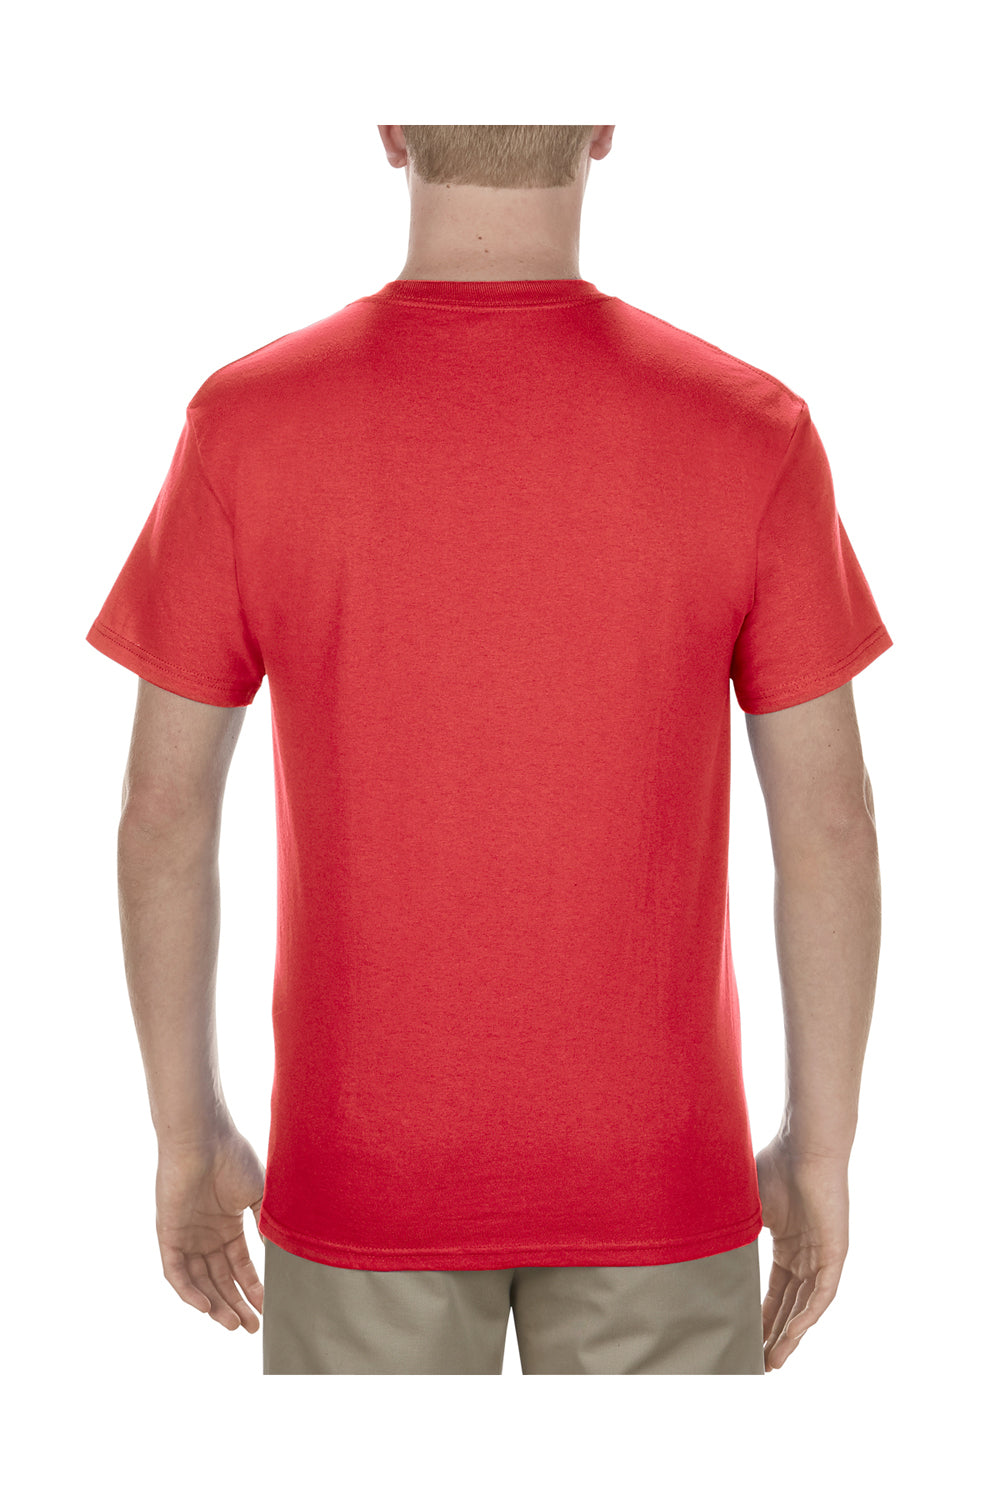 Alstyle AL1901 Mens Short Sleeve Crewneck T-Shirt Red Back